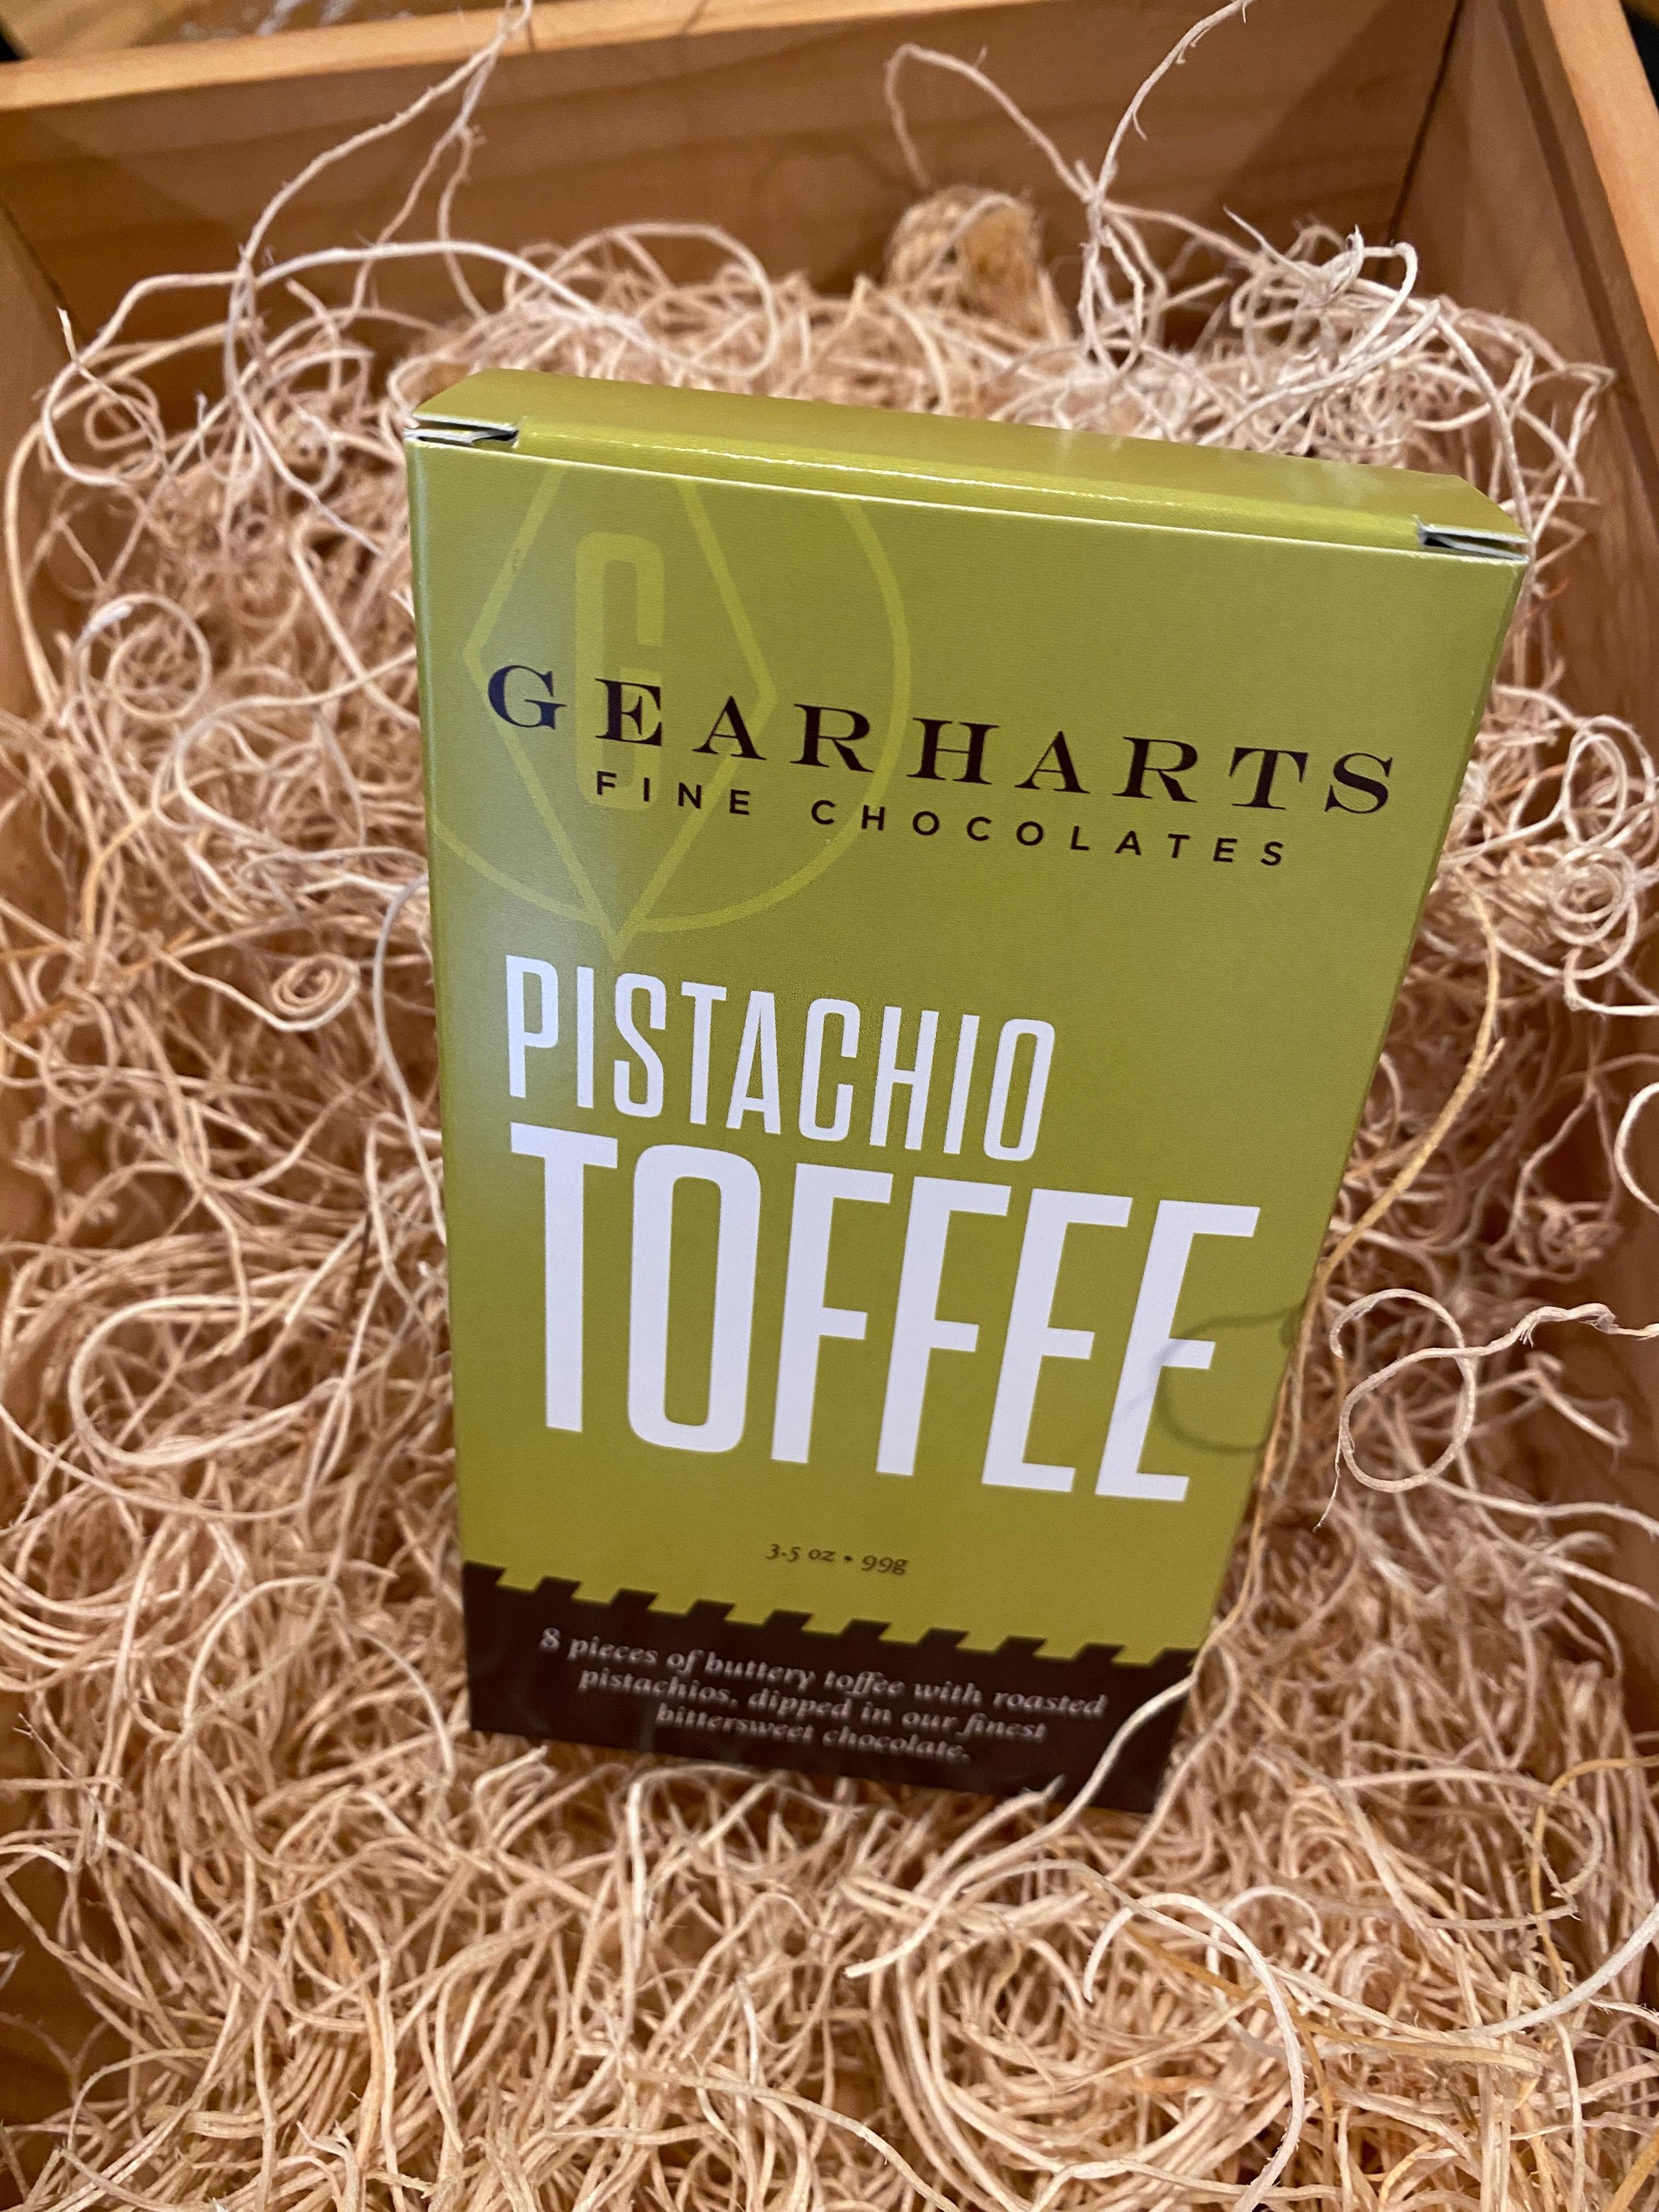 Gearharts Fine Chocolates Pistachio Toffee (3.5oz box): Charlottesville, Virginia